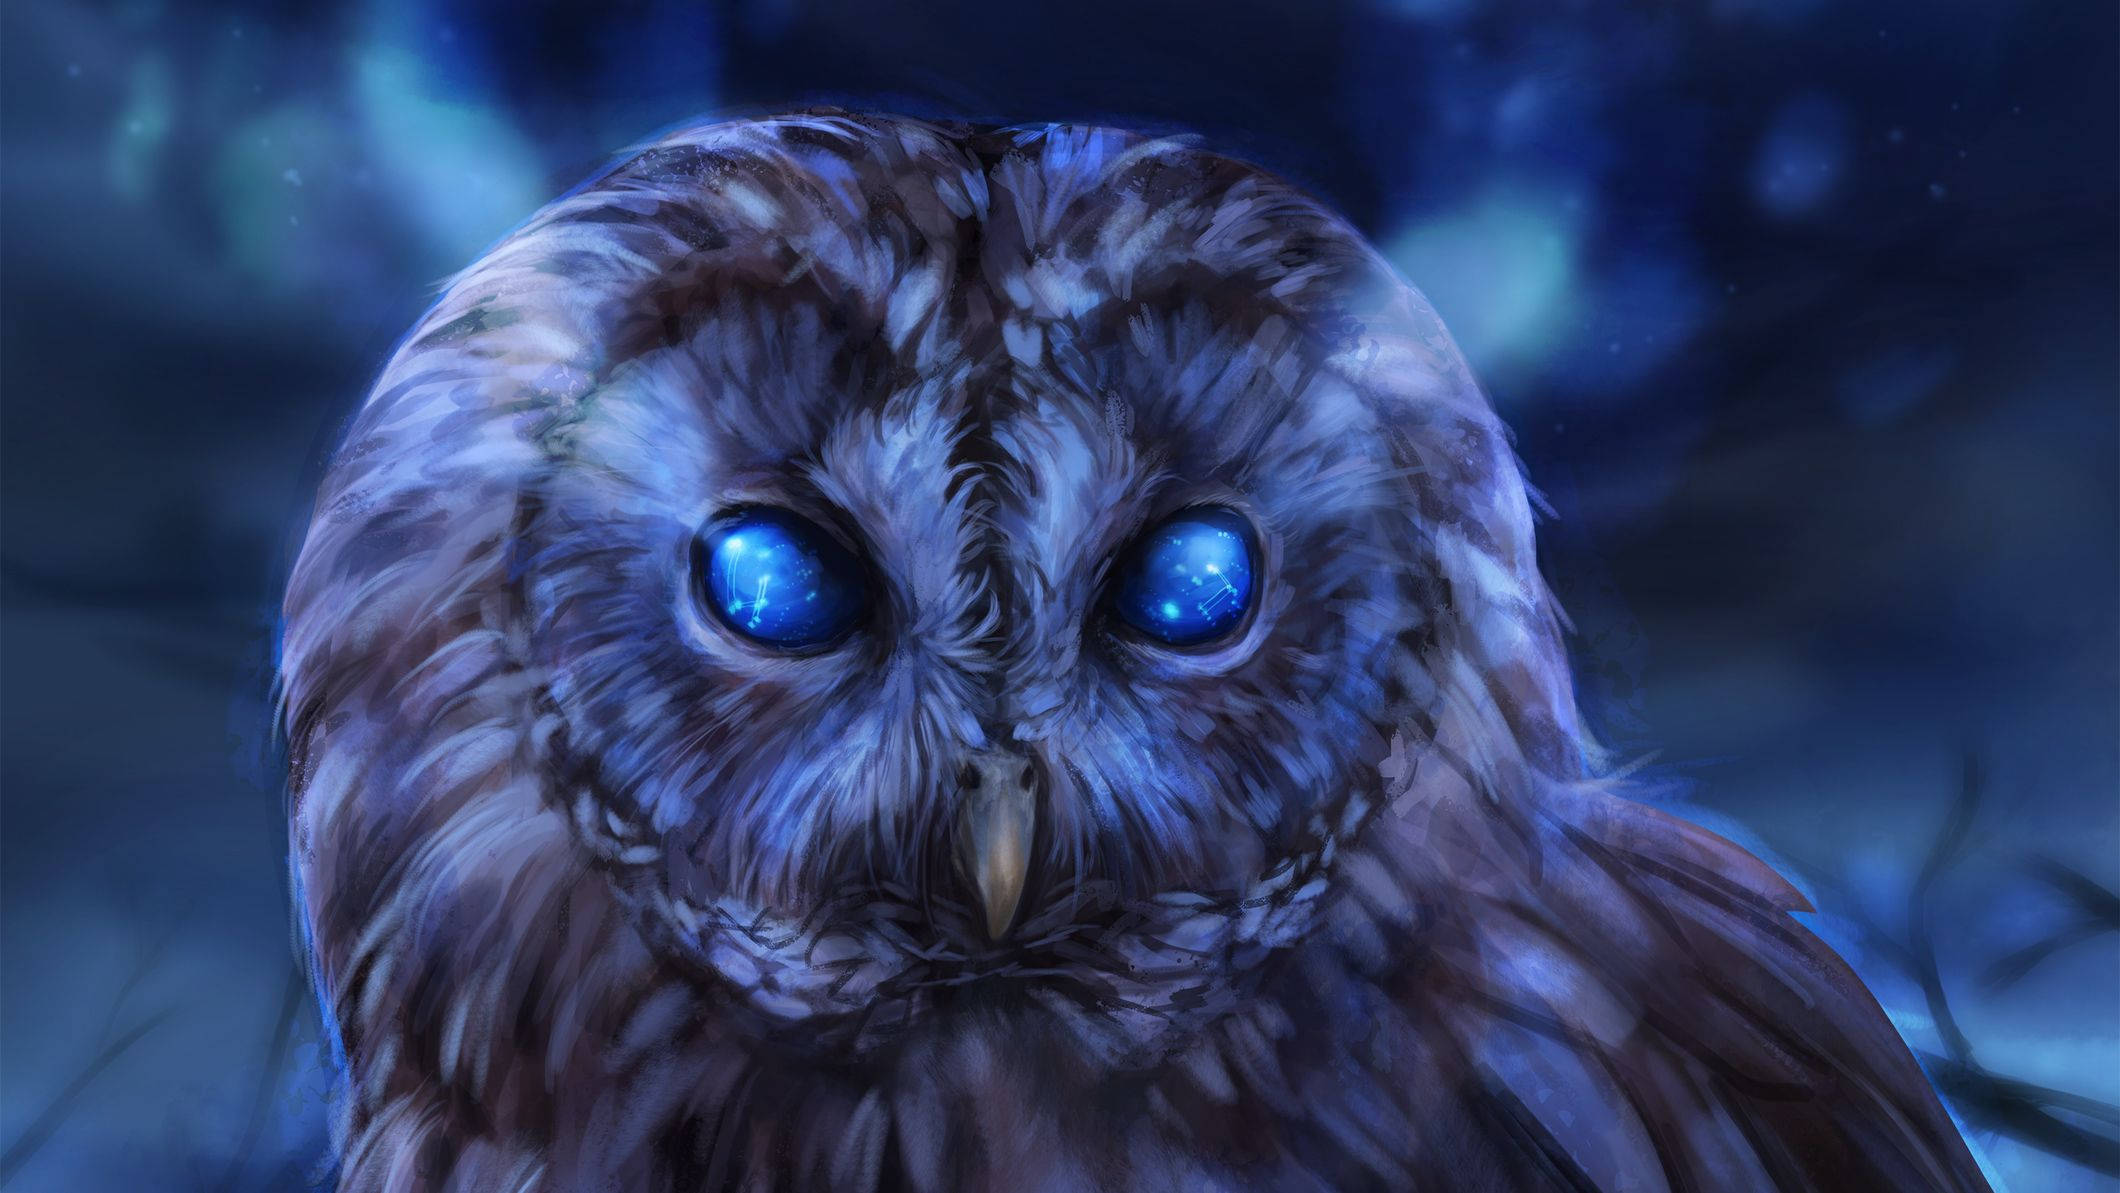 Download Blue Owl Magical Eyes Wallpaper 